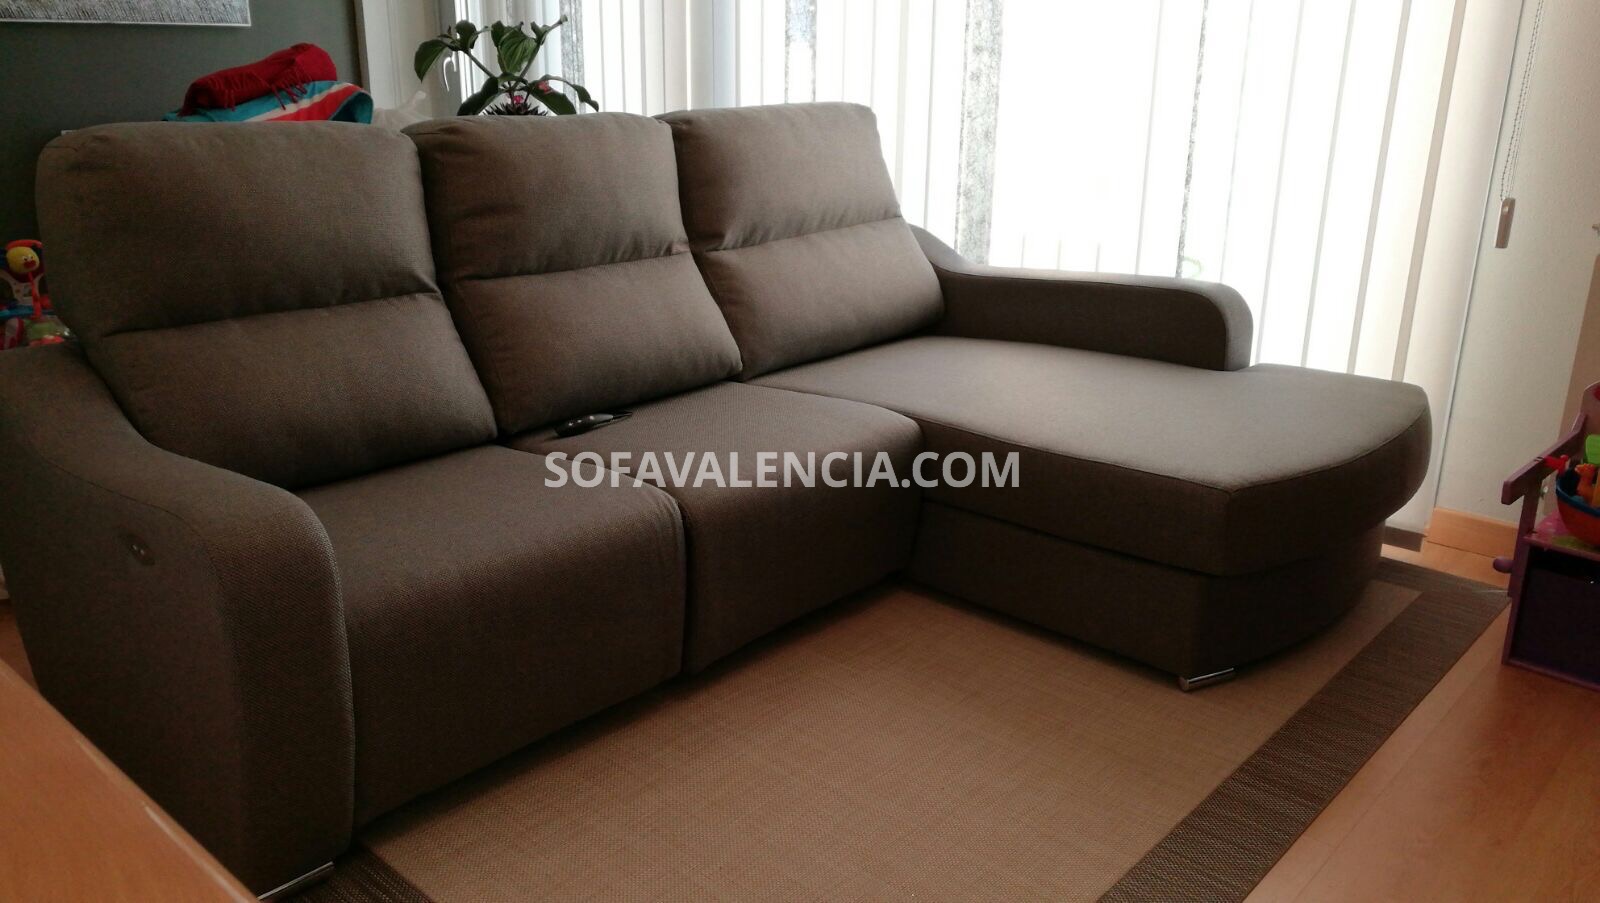 sofa-valencia-fotos-clientes-31